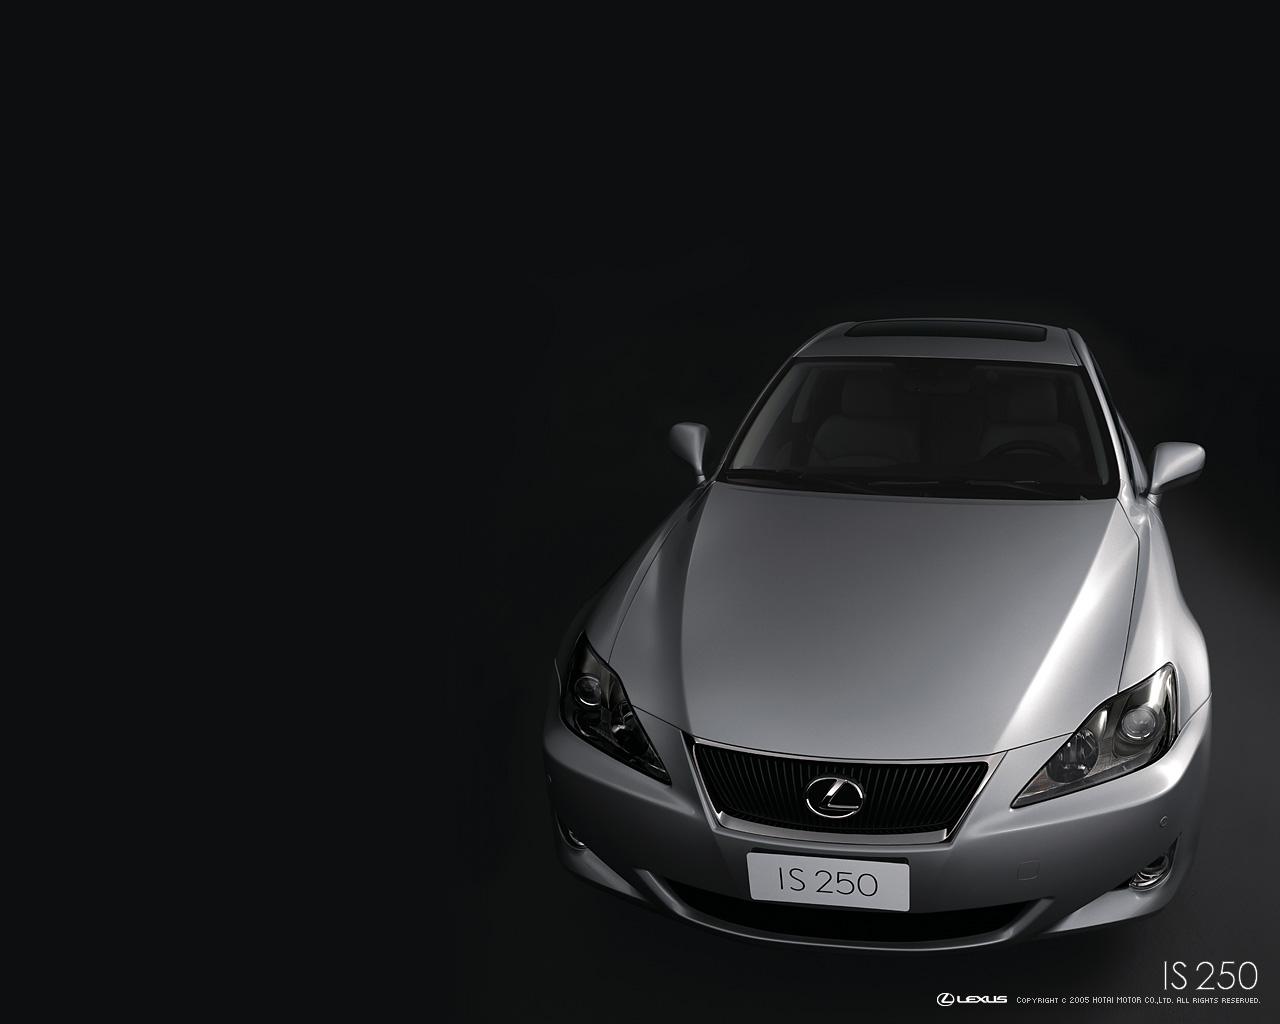 Lexus IS 250 black Windows 7 Cars Desktop Wallpaper. Car